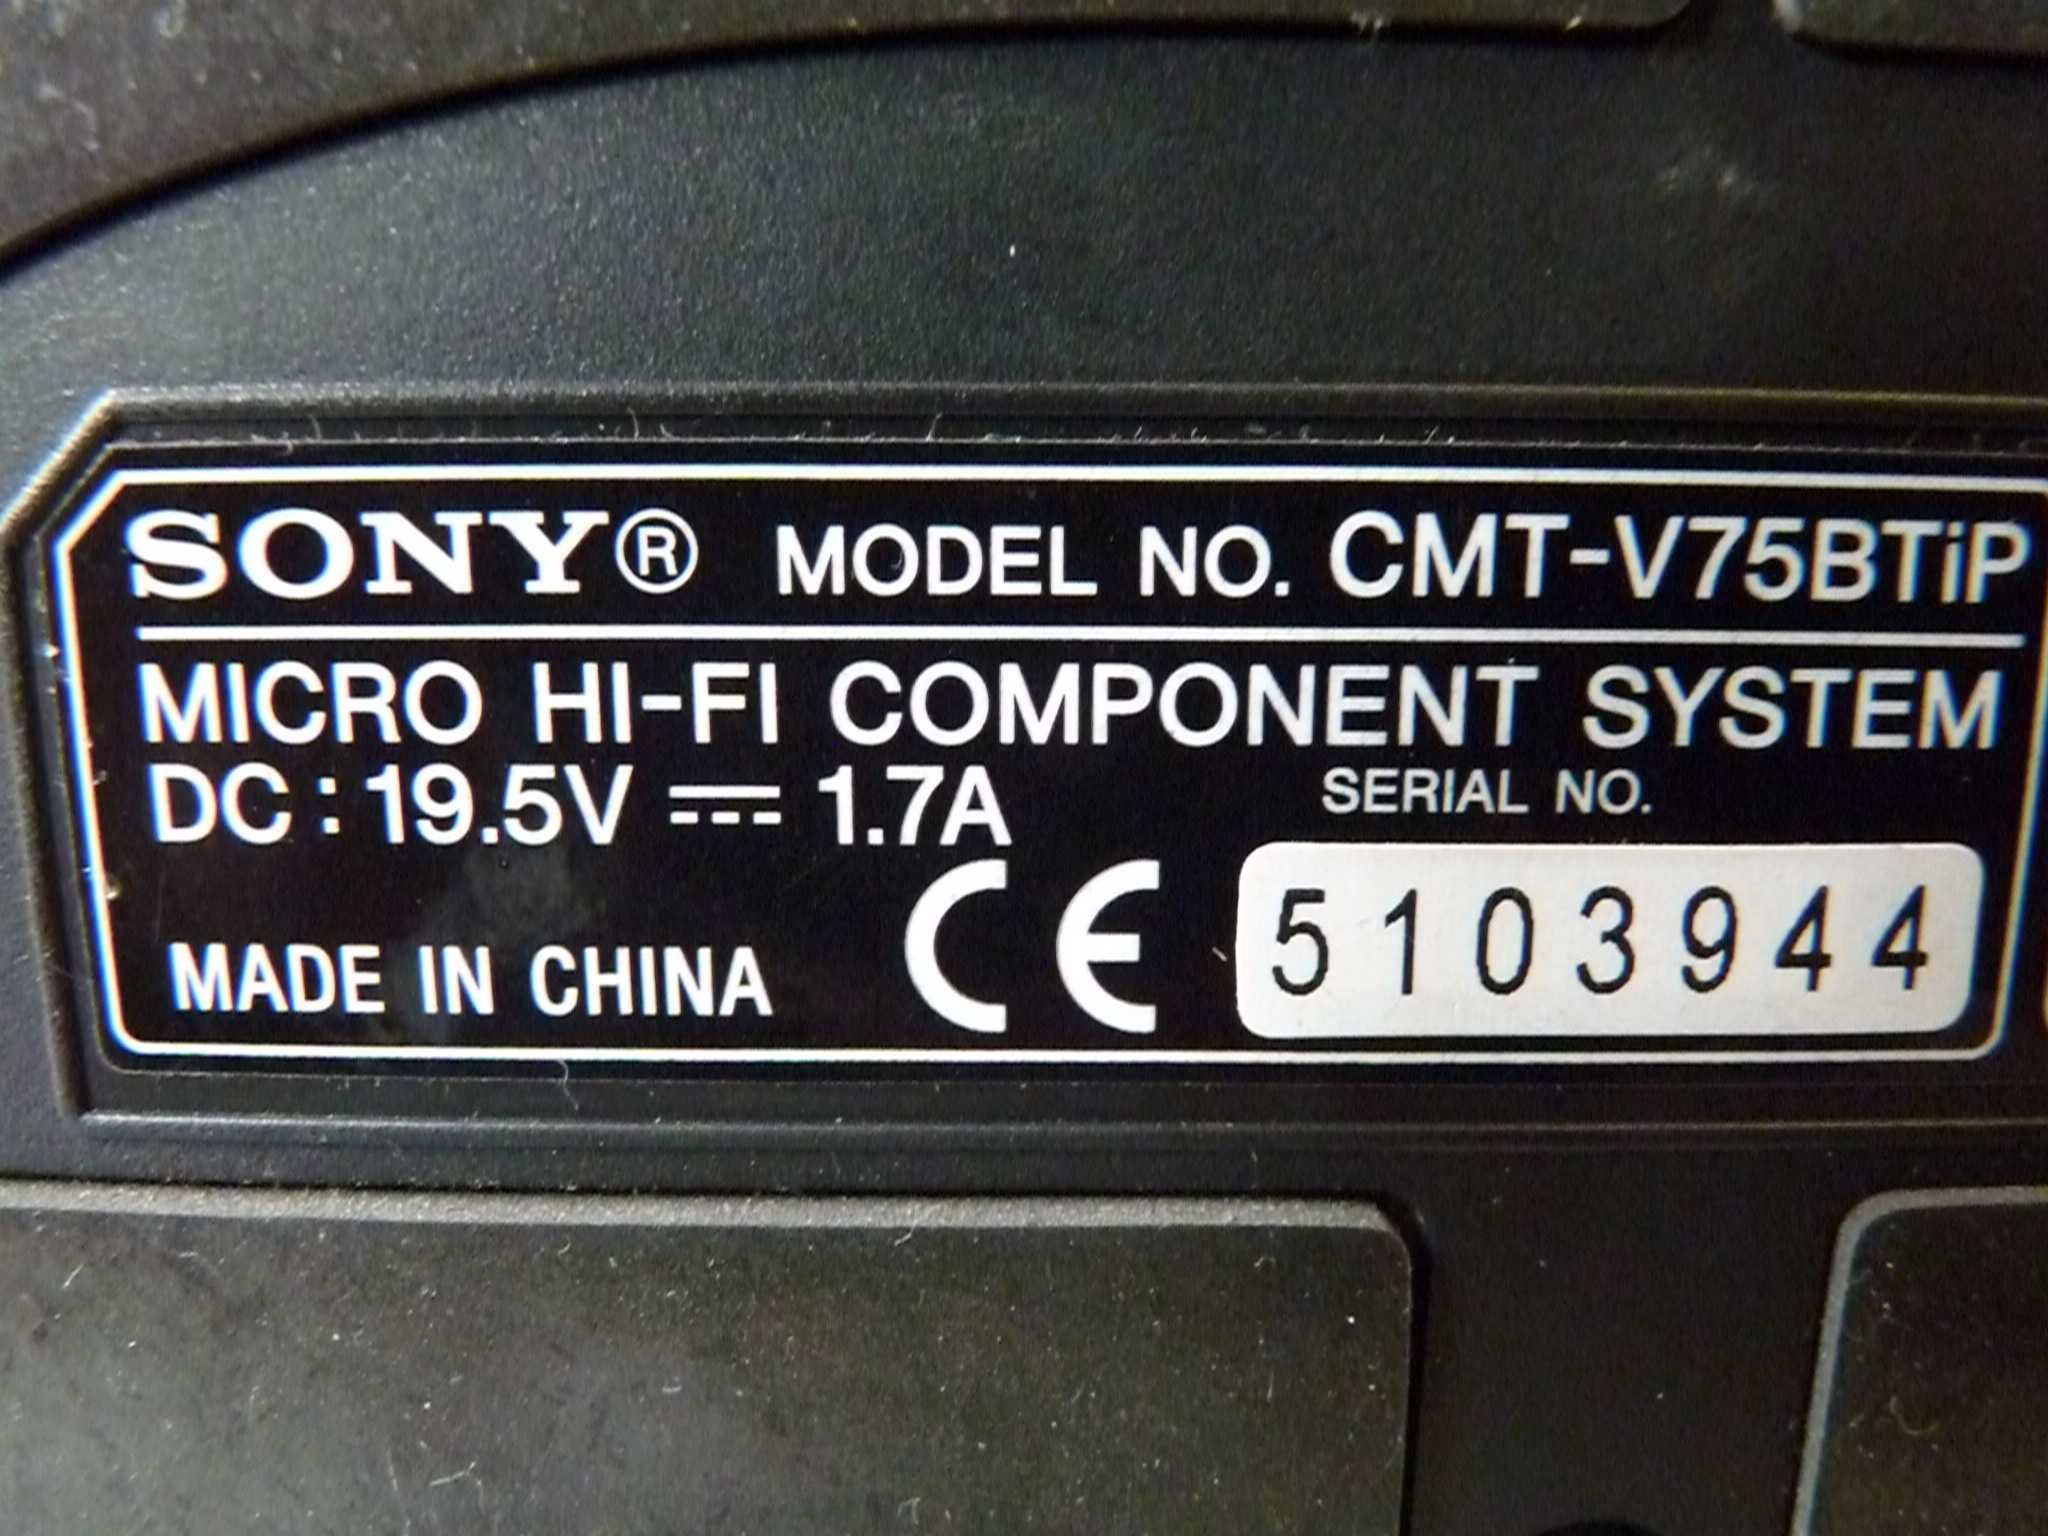 Micro HI-FI Component System SONY CMV75BTiP,tanio.